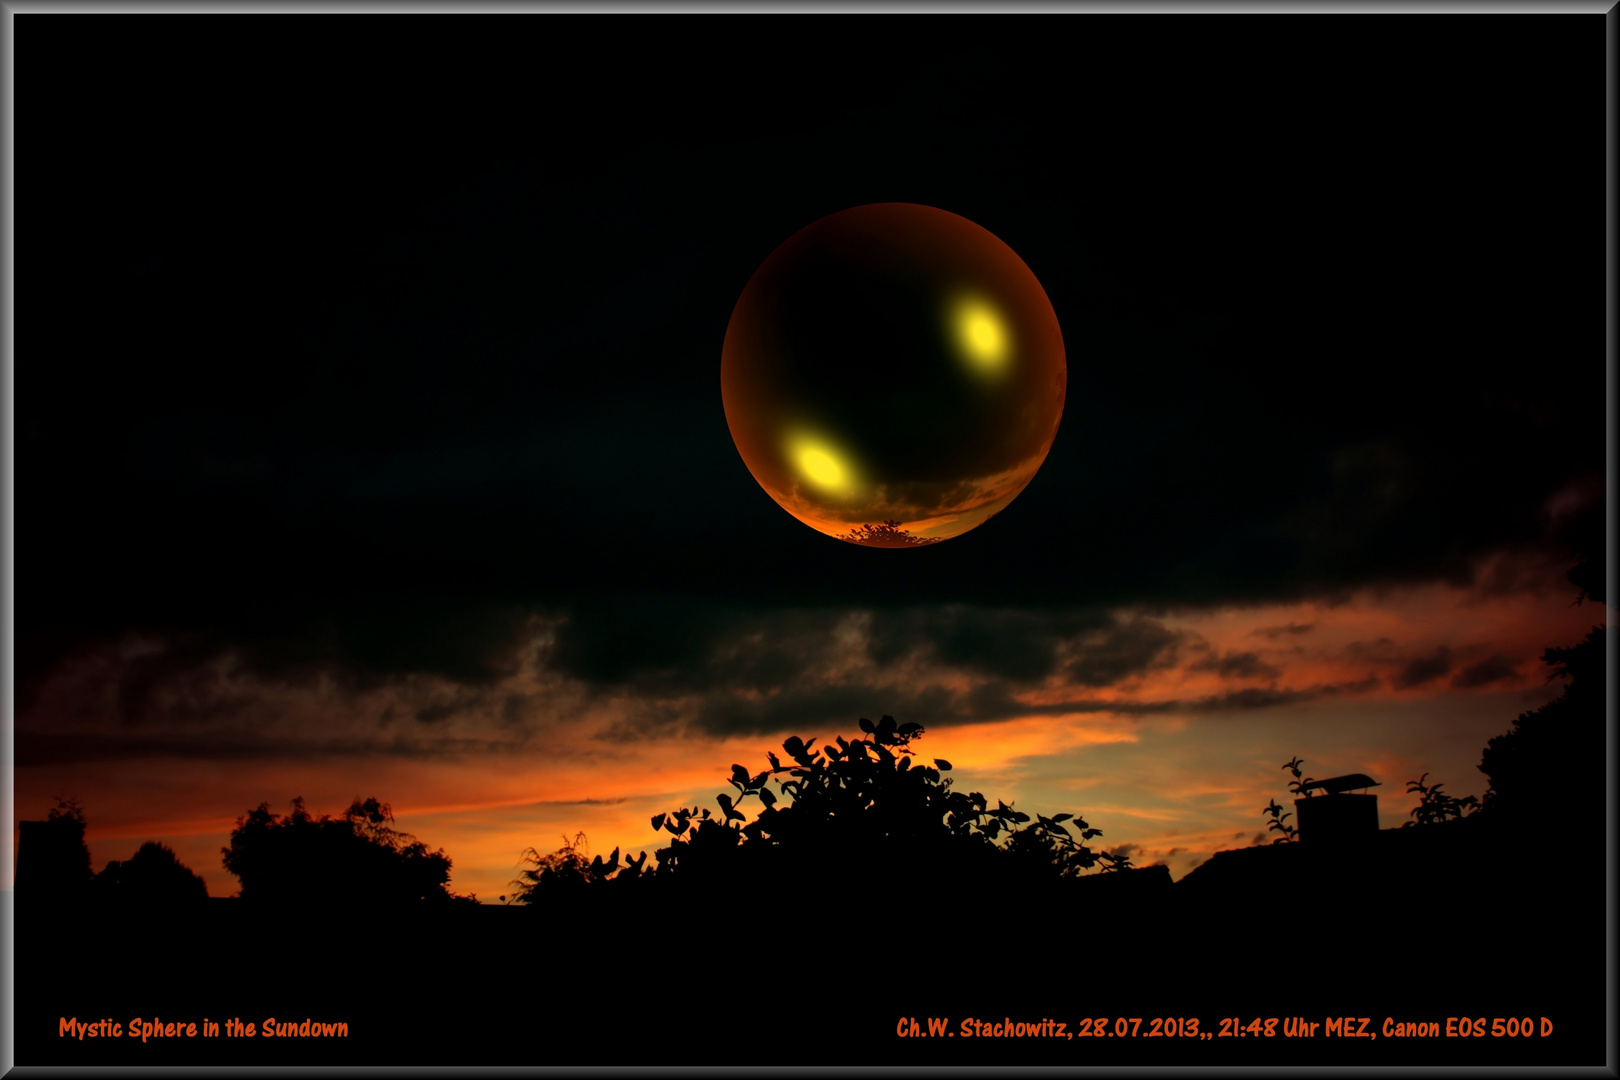 Mystic Sphere in the Sundown